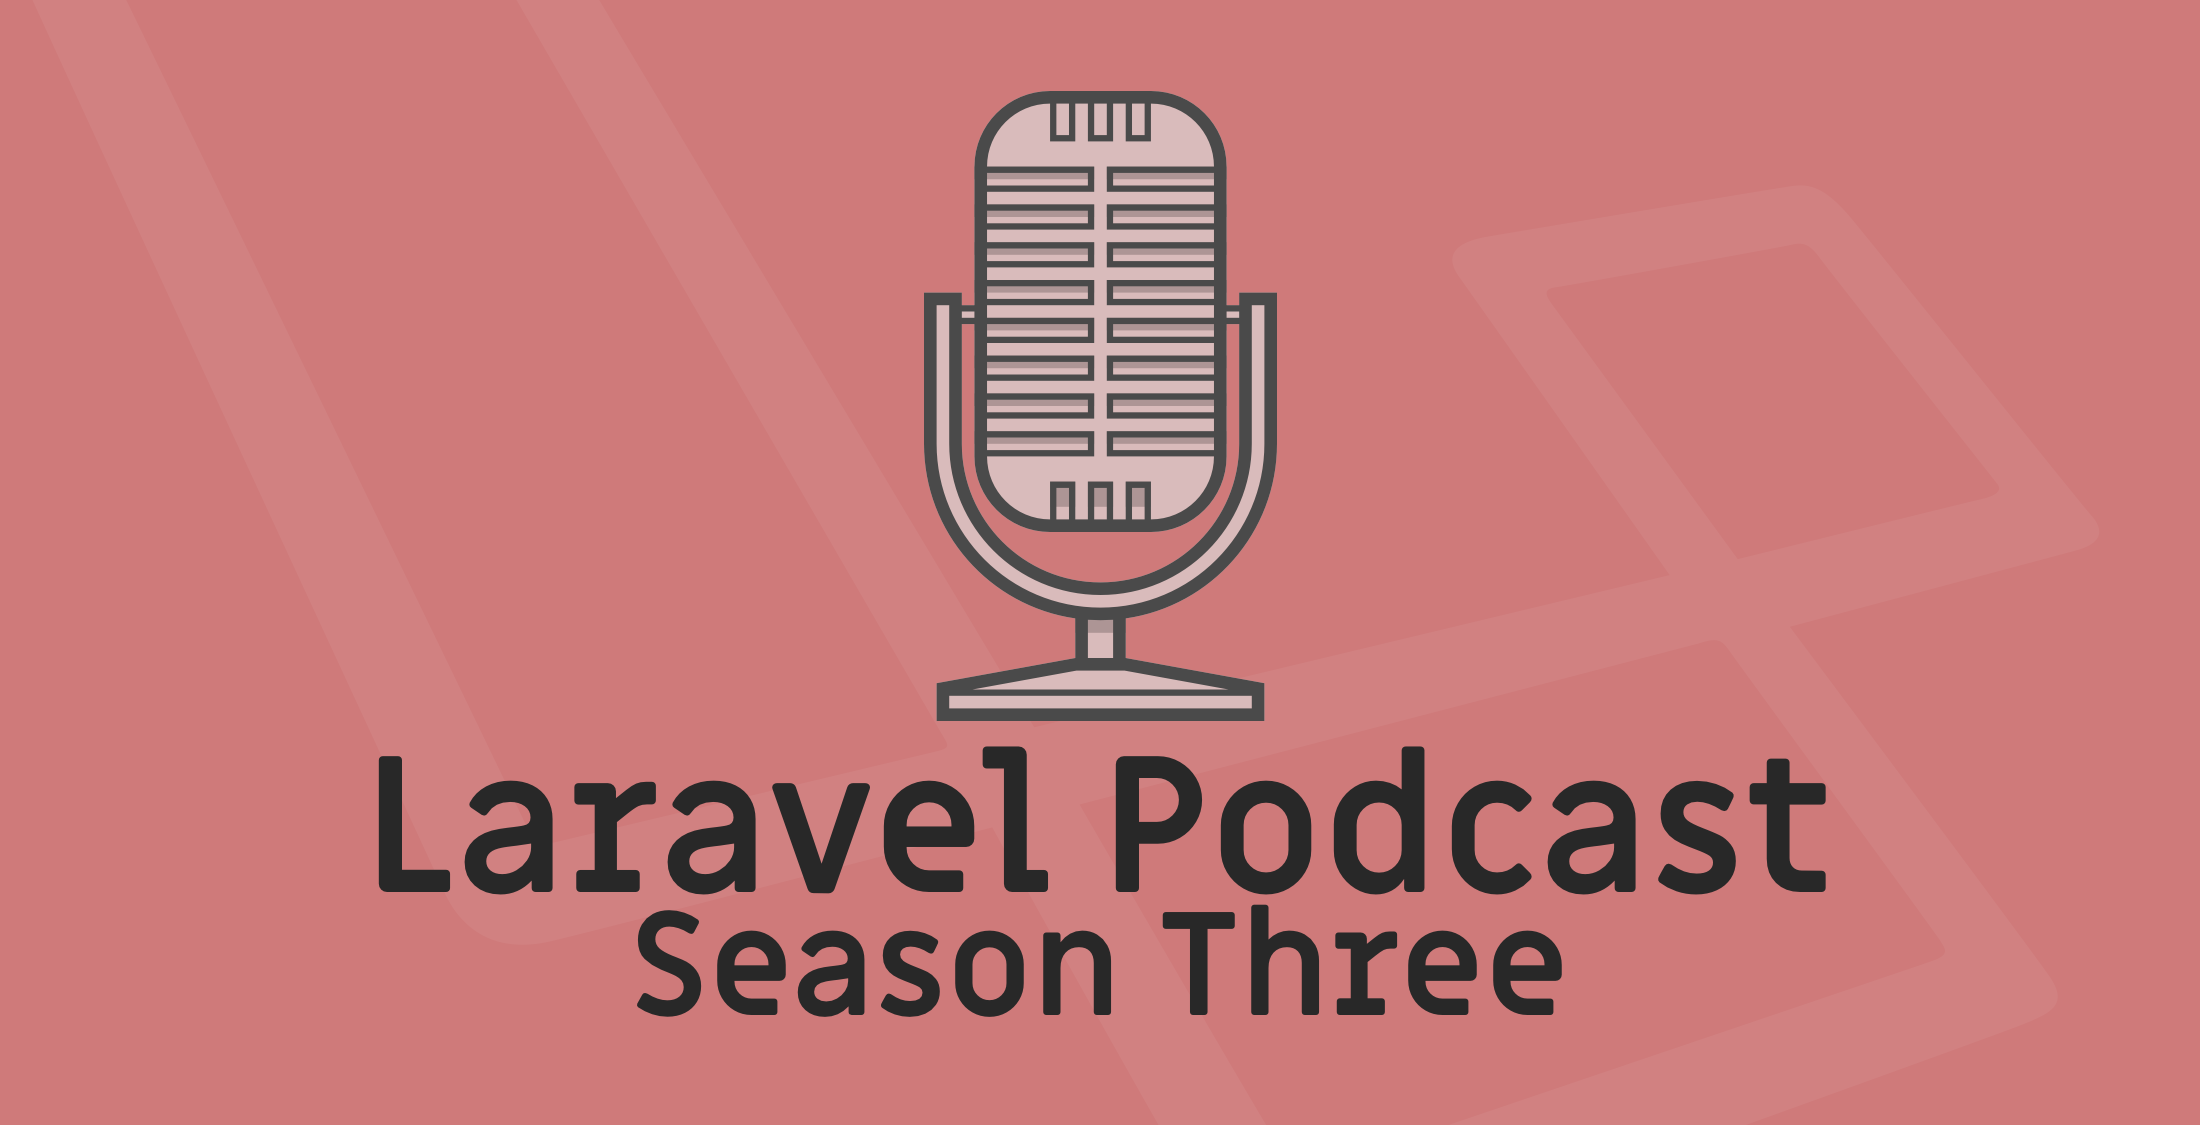 The Laravel Podcast Season Three image